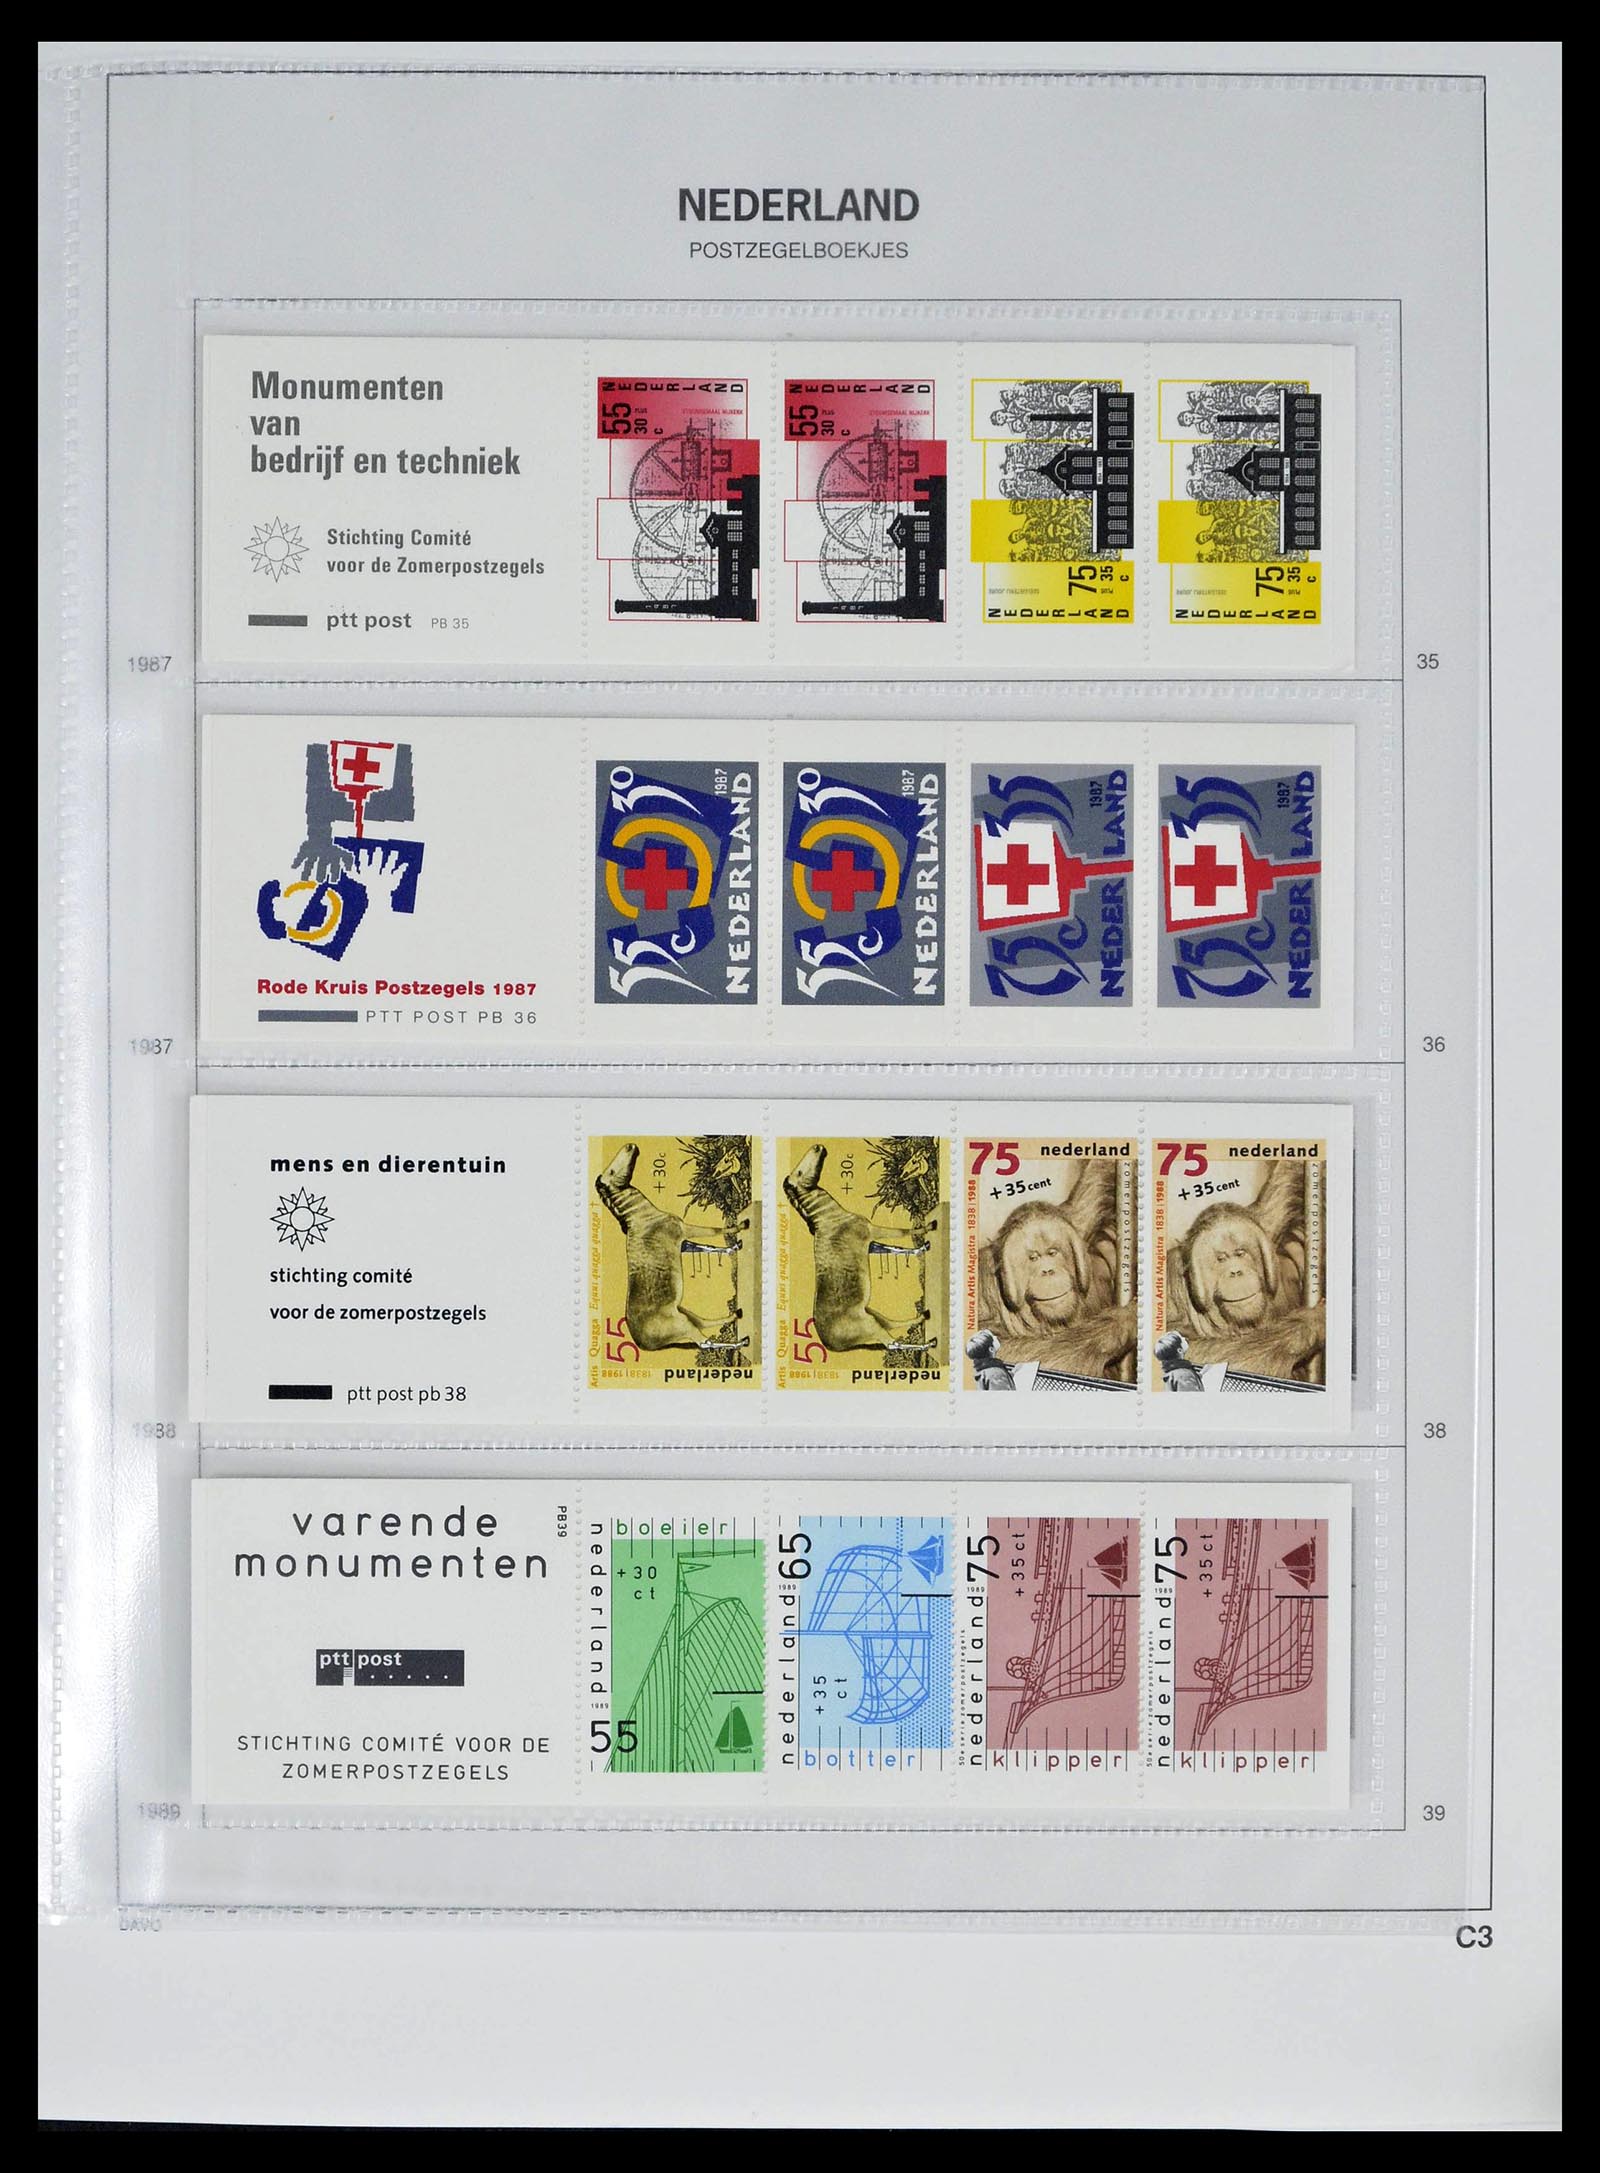 39362 0024 - Stamp collection 39362 Netherlands stamp booklets 1964-2003.